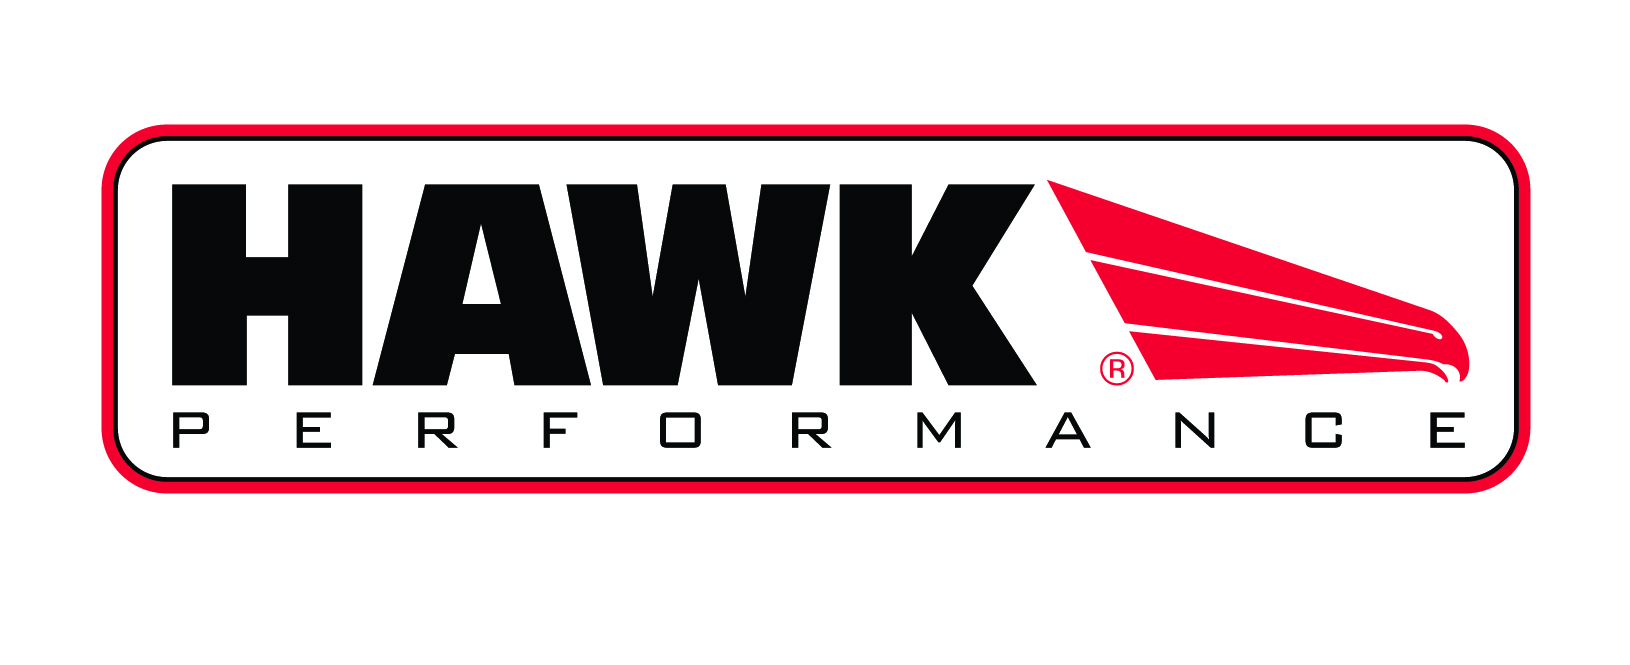 Brzdové kotouče Hawk Performance RAM Trucks RAM (4th Gen) 2009-2018